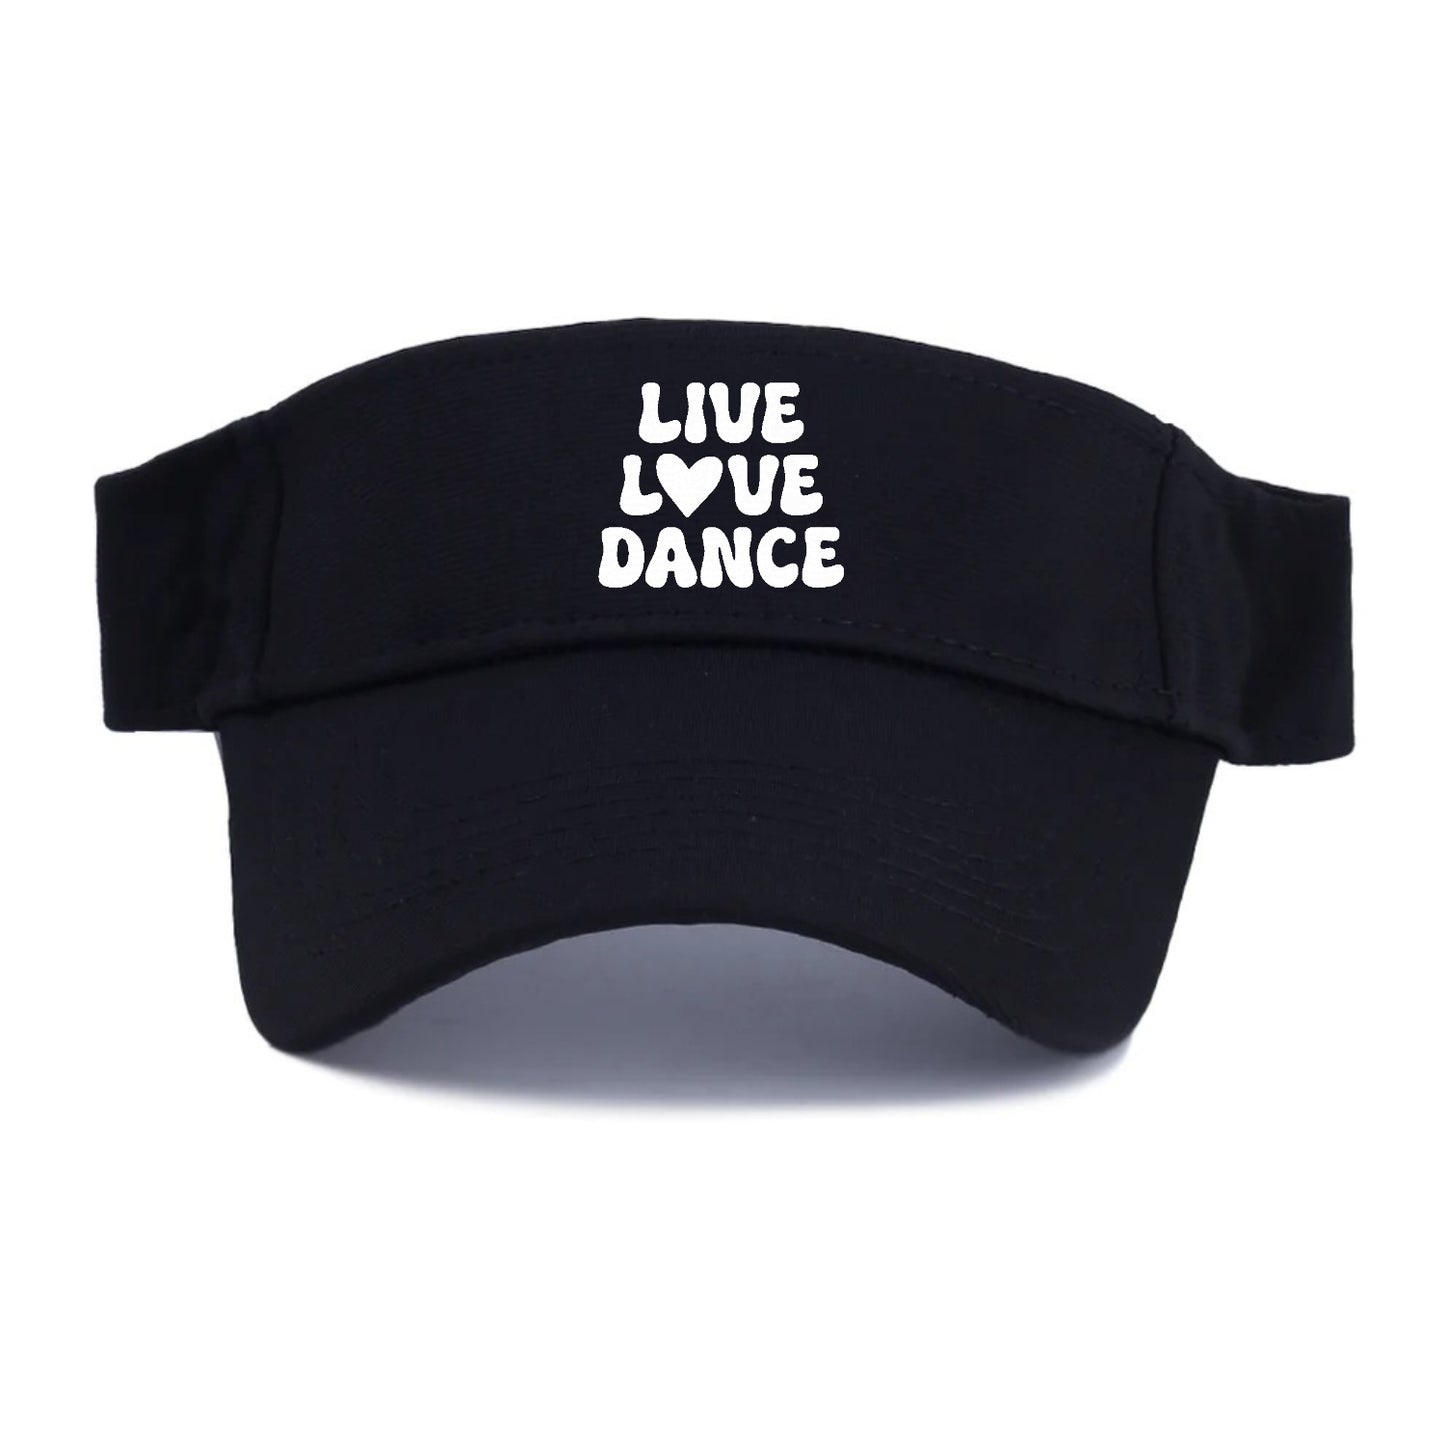 live love dance Hat